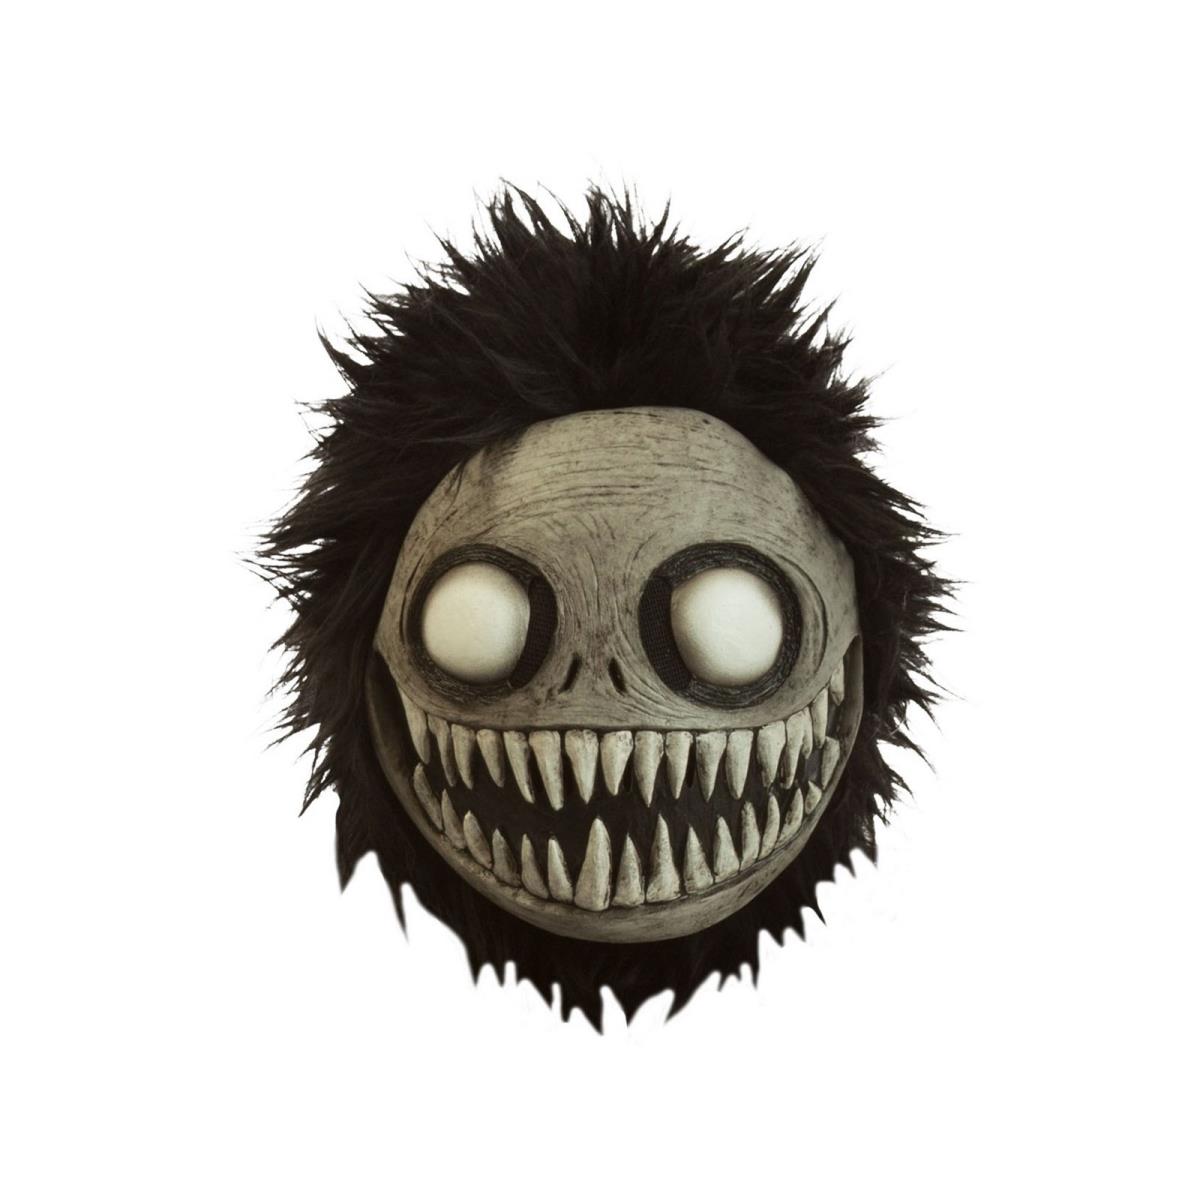 403632 Creepypasta Nightmare Adult Mask - One Size